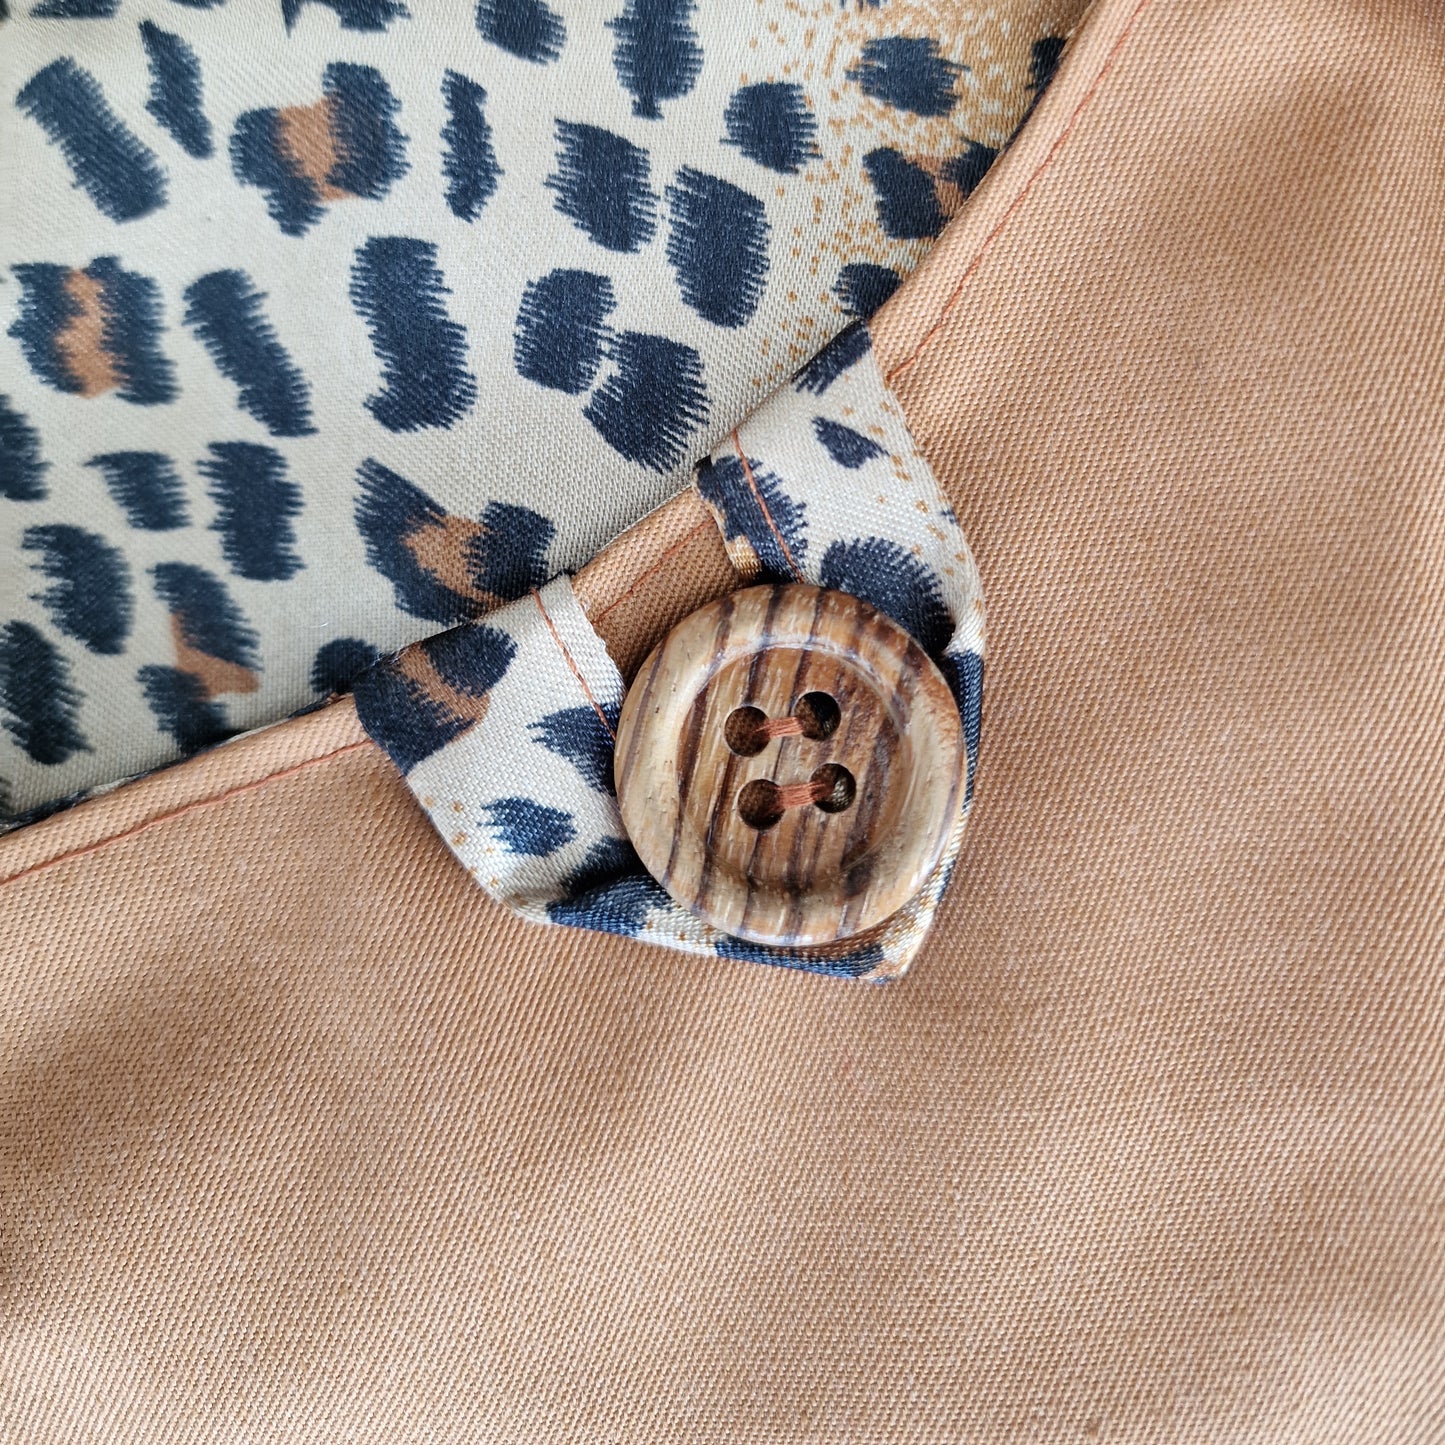 Fabric shoulder bag in brown + leopard print (VIER 9)